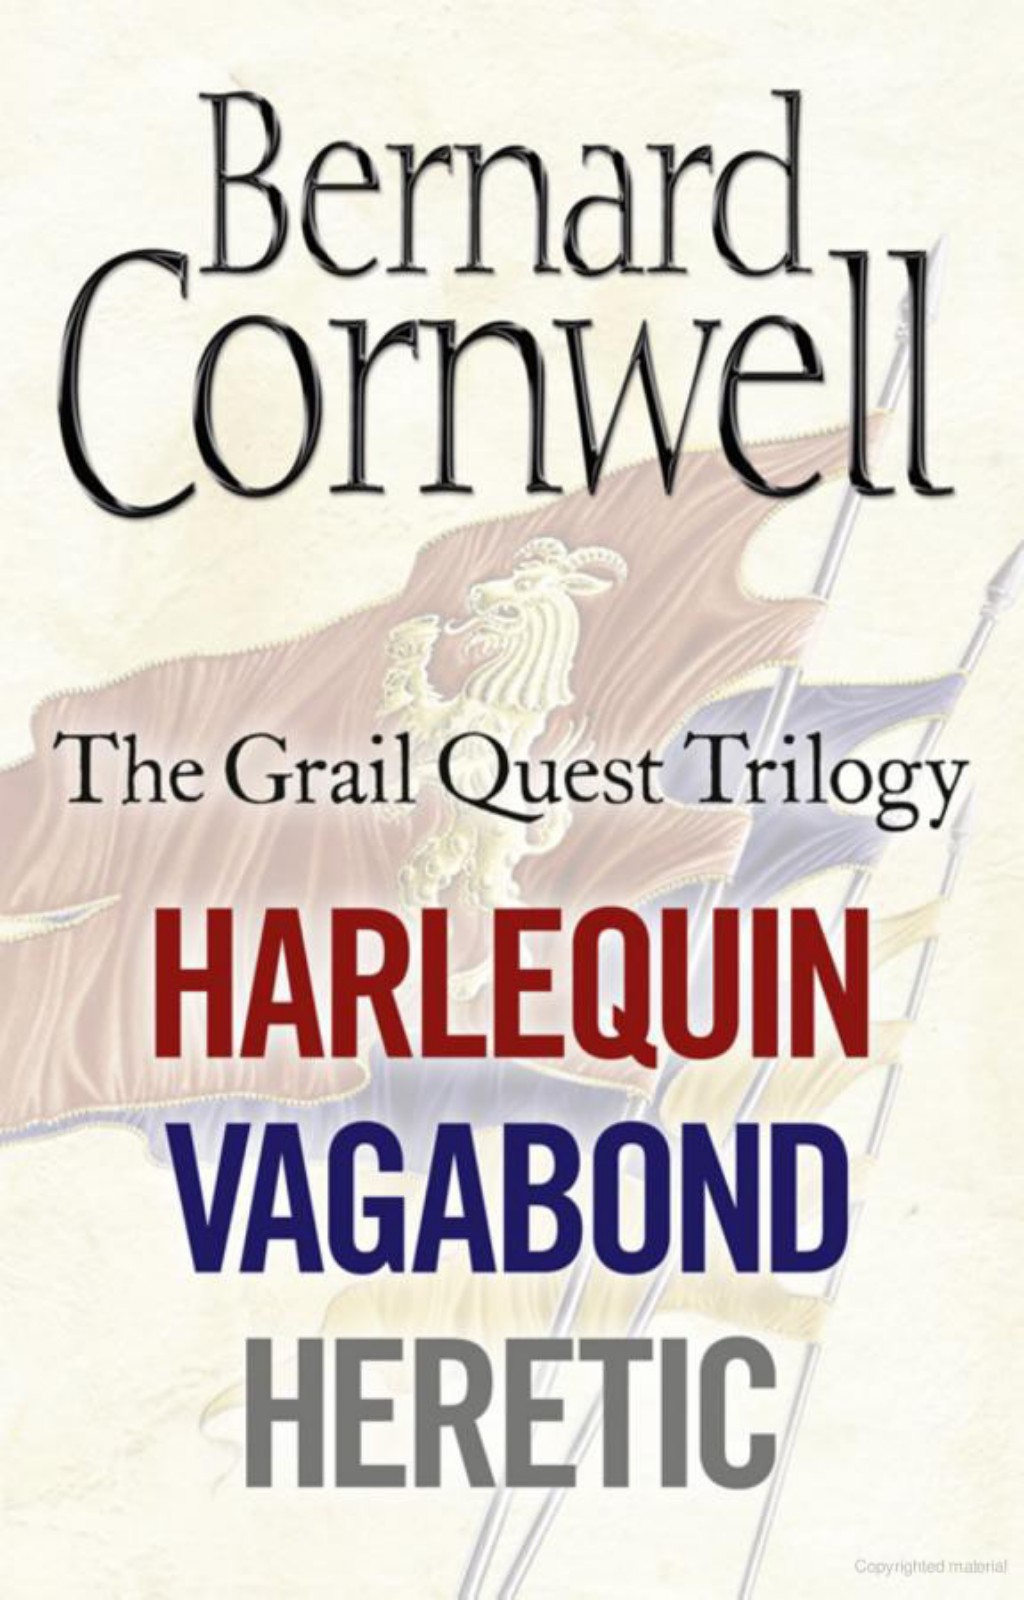 The Grail Quest Books 1-3: Harlequin, Vagabond, Heretic by Bernard Cornwell